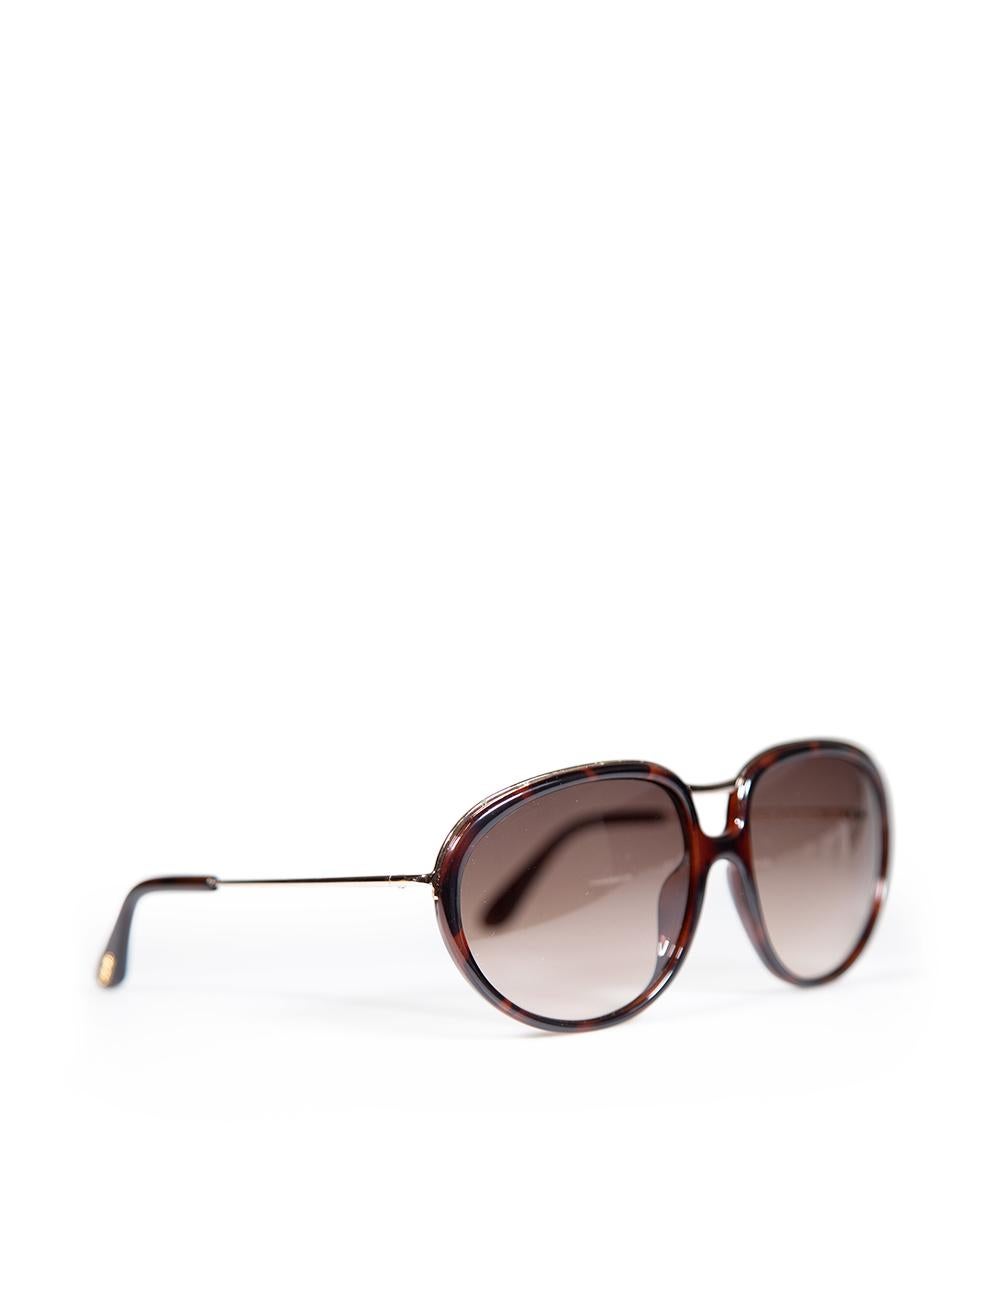 Tom Ford Dark Havana Gradient Sunglasses In New Condition For Sale In London, GB